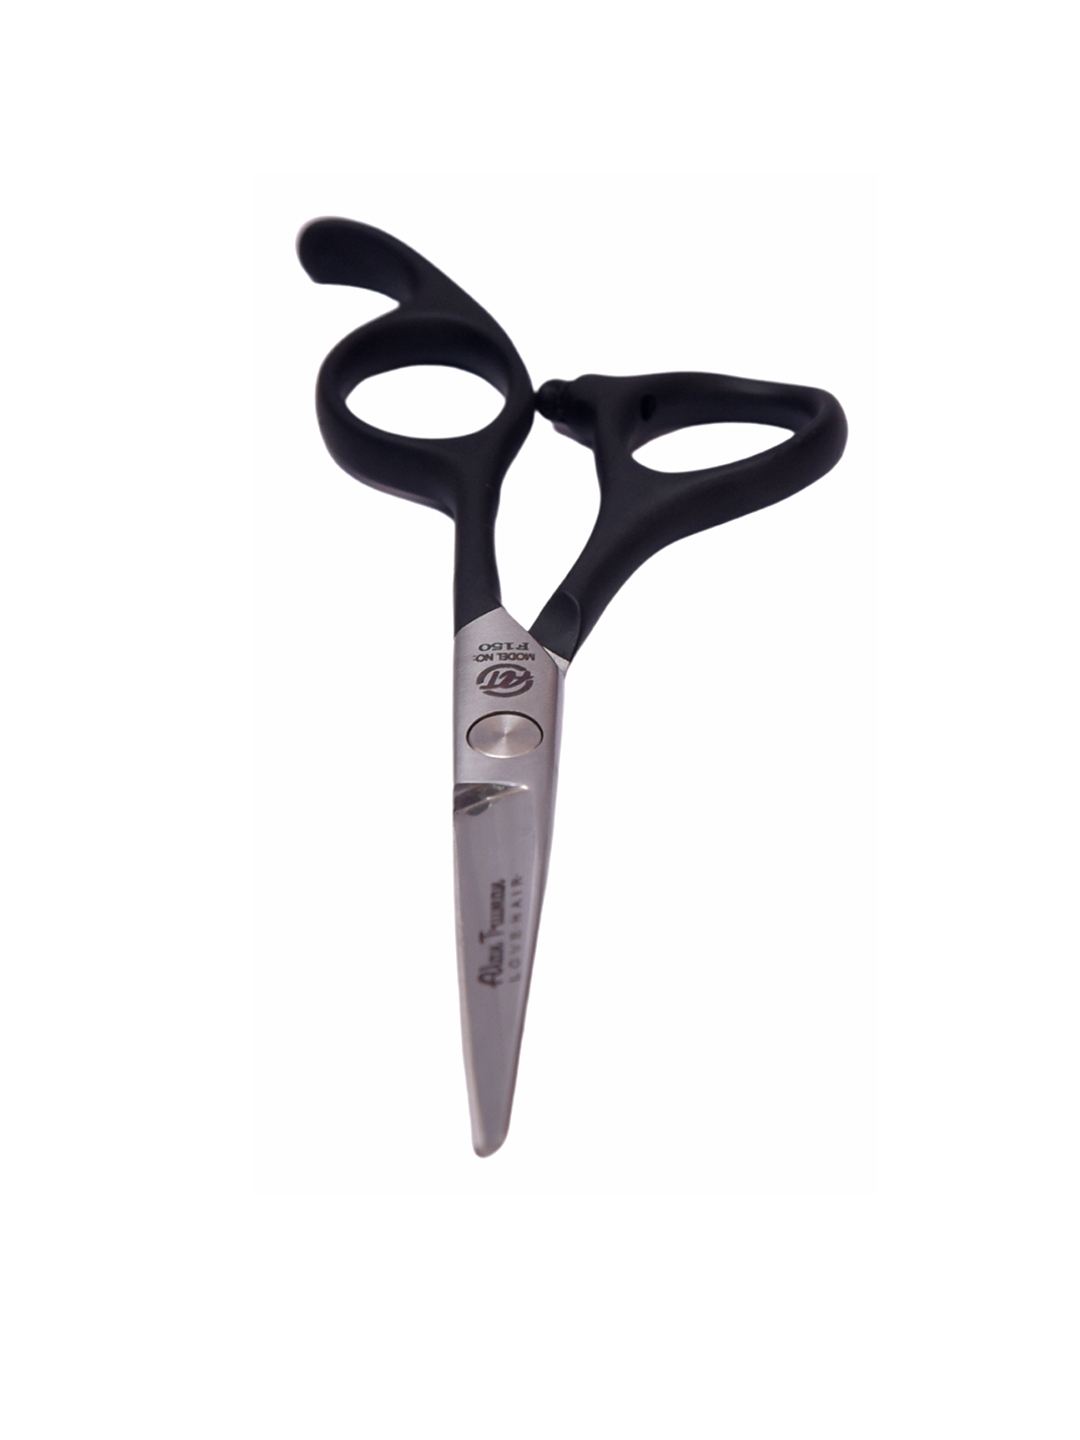 Alan Truman Rubberised Handle Cutting Scissor   F150  5 inch